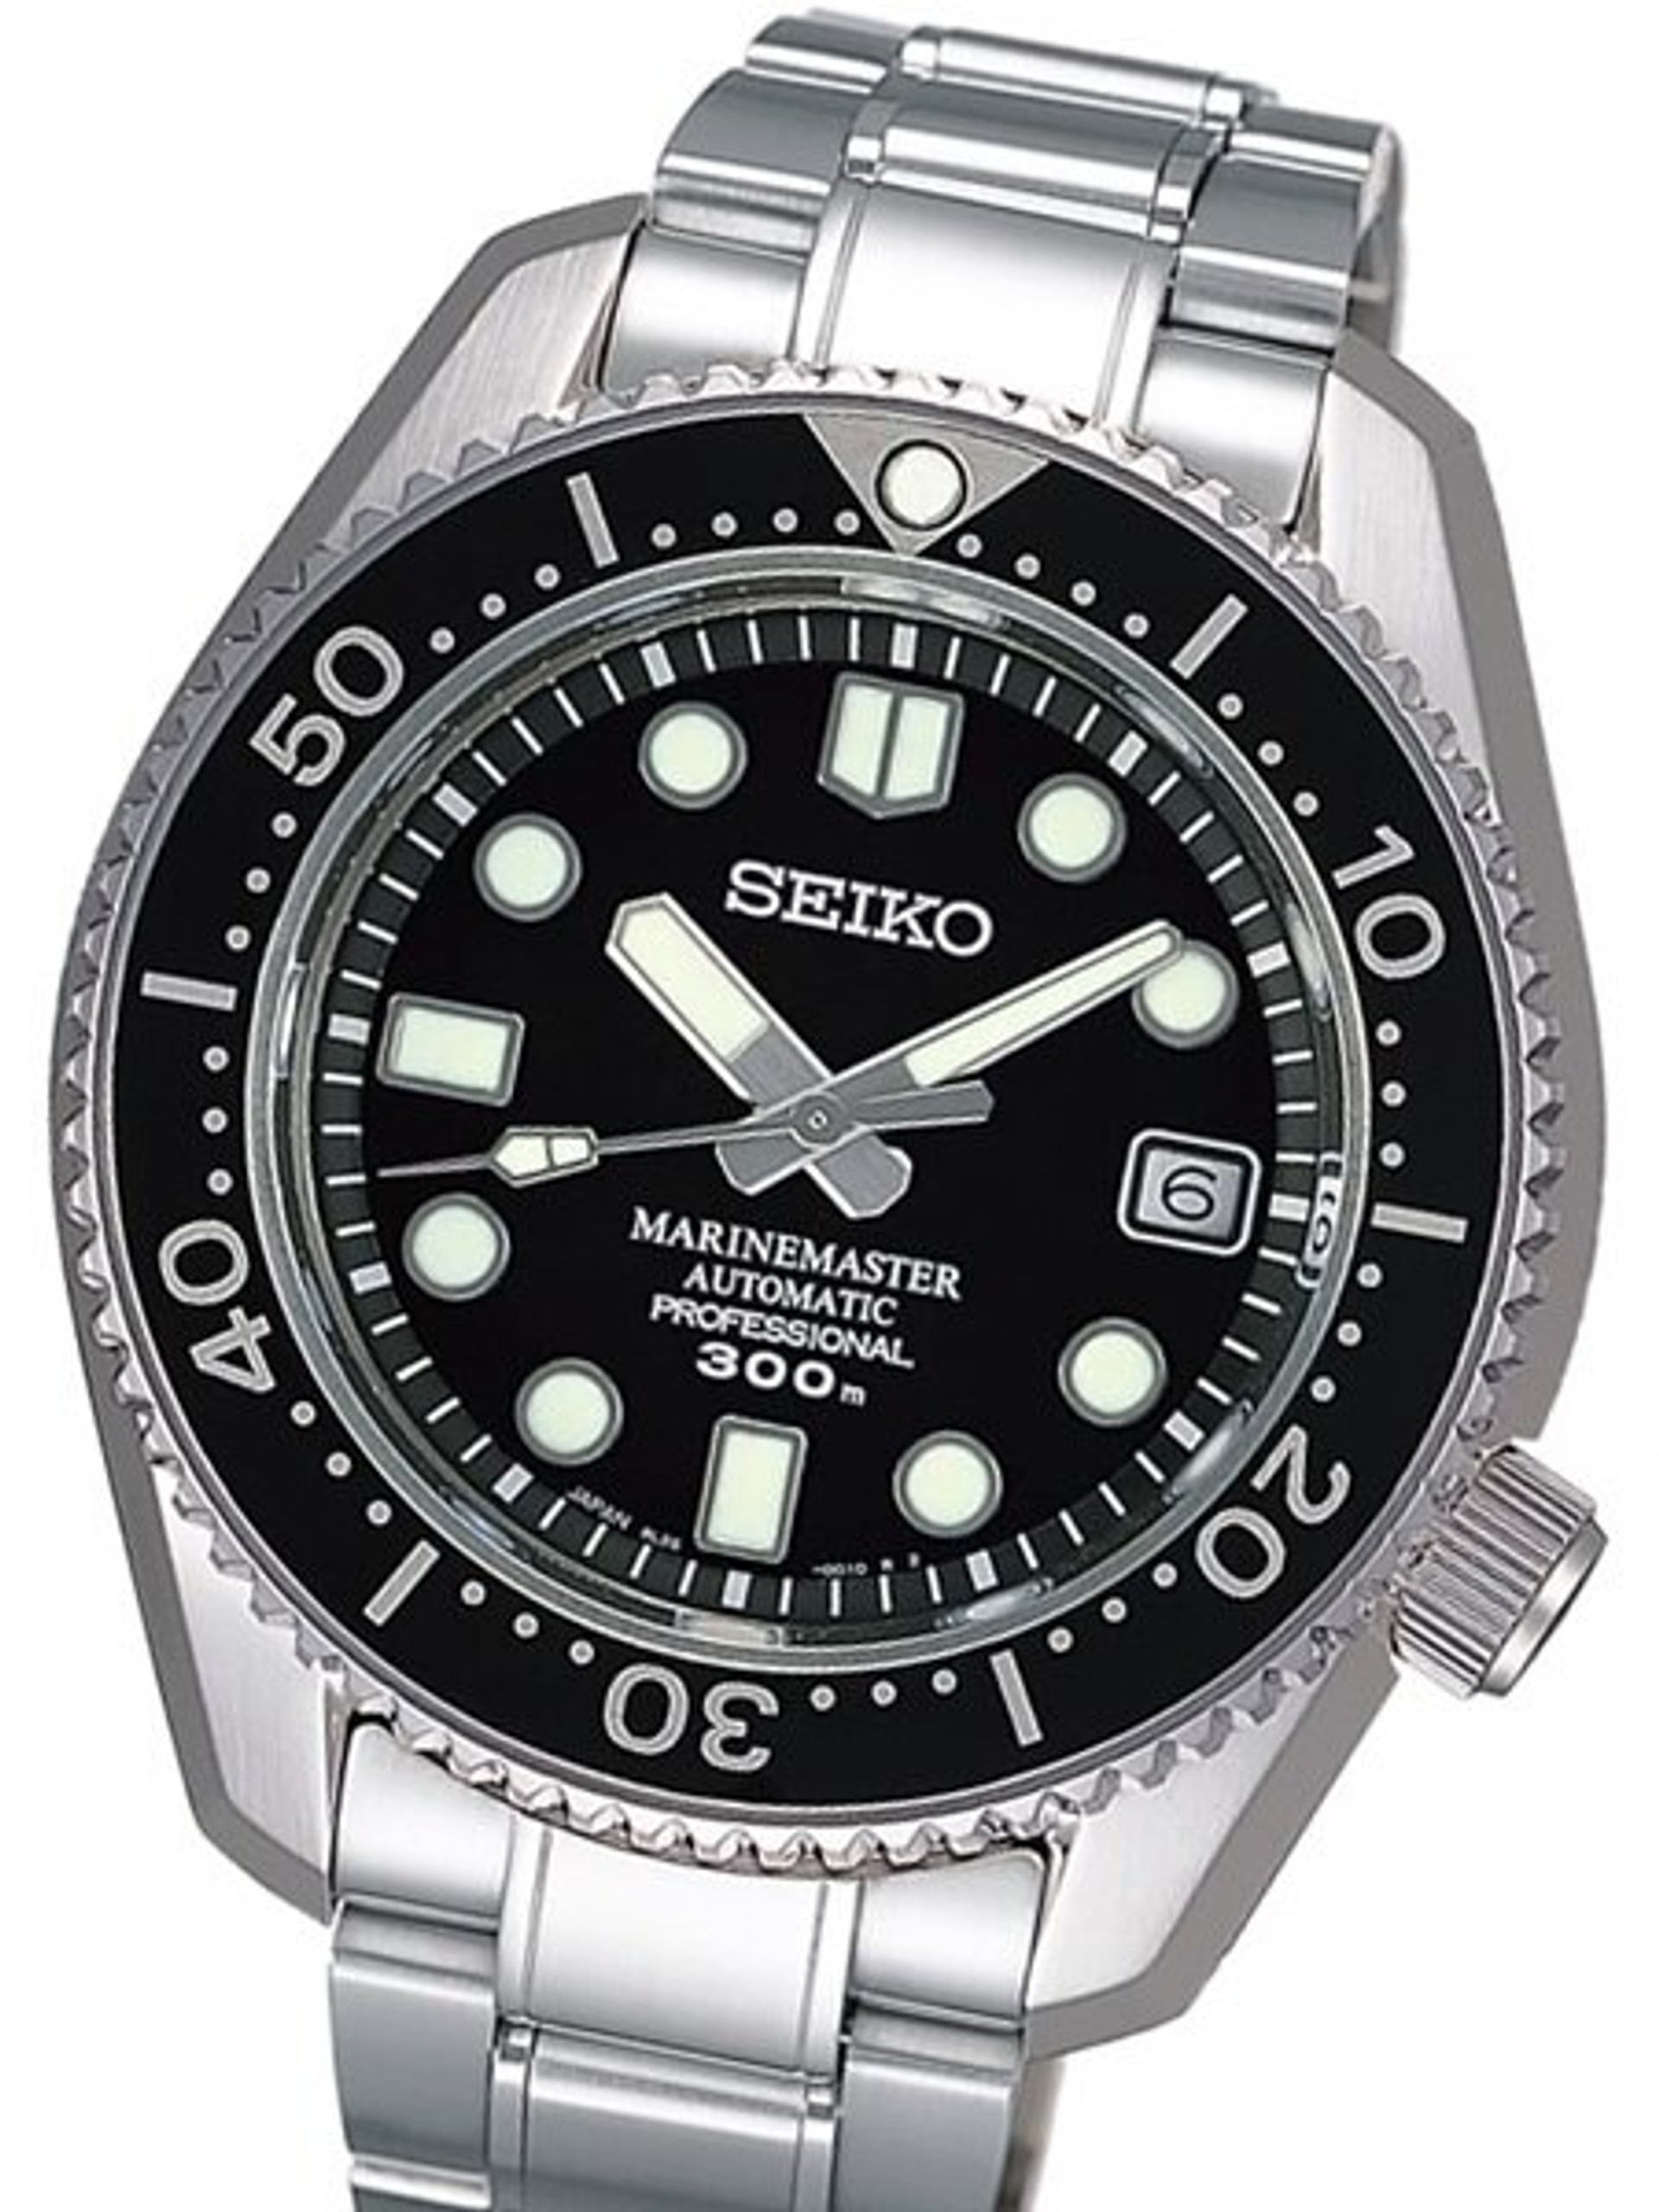 SEIKO Marine Master Professional 300M SEIKO Automatic Diver with 44mm ...